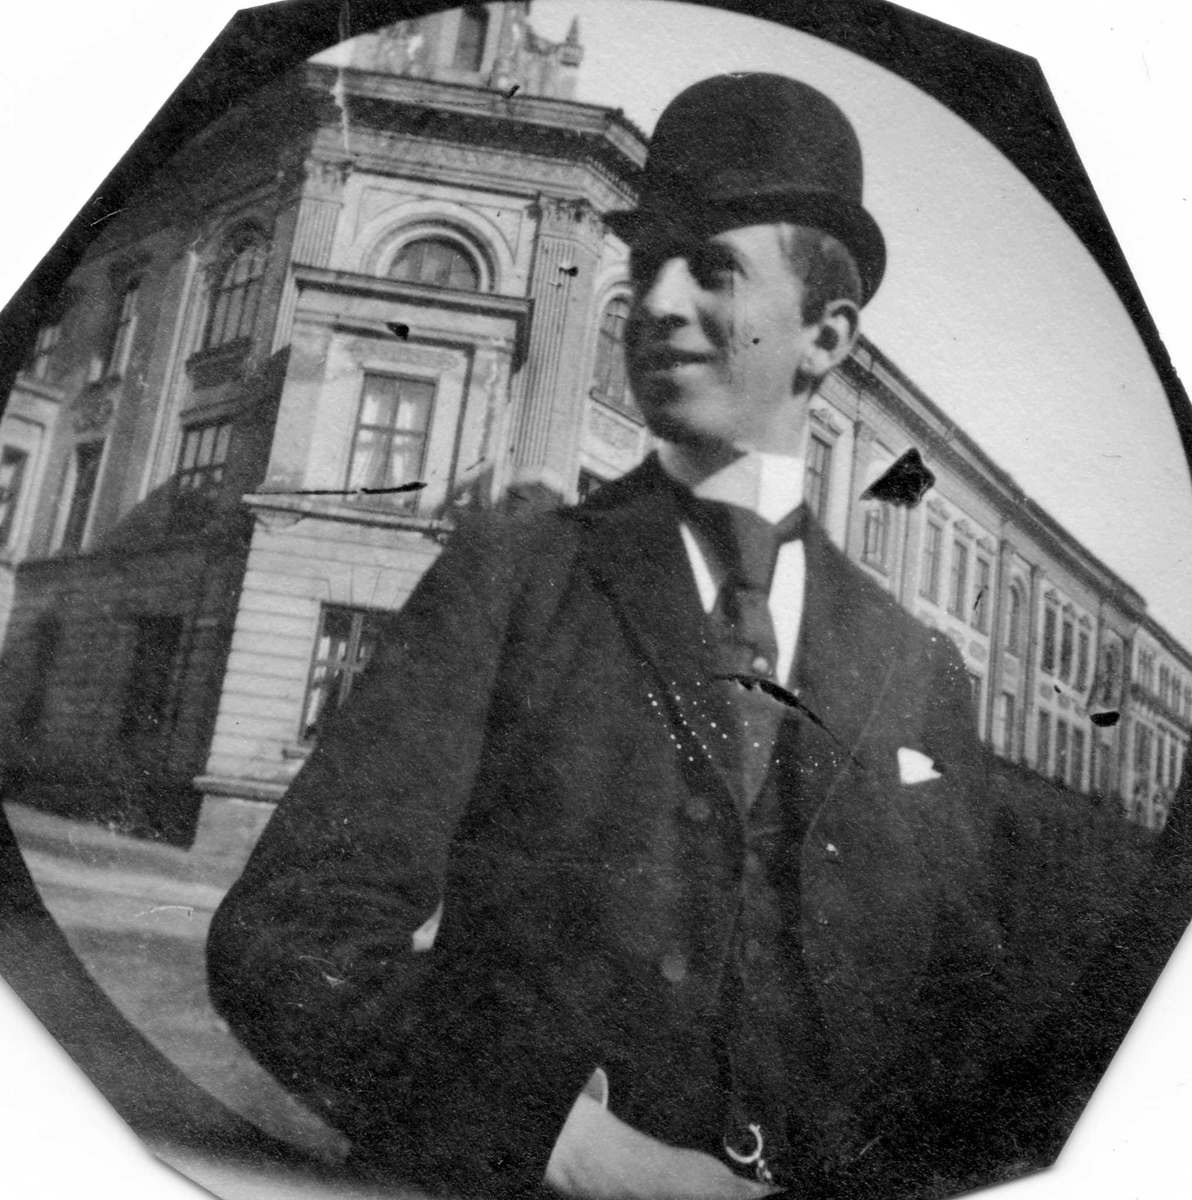 Herman Reimers, senere legasjonssekretær i Paris, på gatehjørne foran bygård, ant. Oslo.
Reimers er fotografert foran Observatoriegata 12 som ligger på hjørnet Observatoriegata / Huidtfeldts gate.